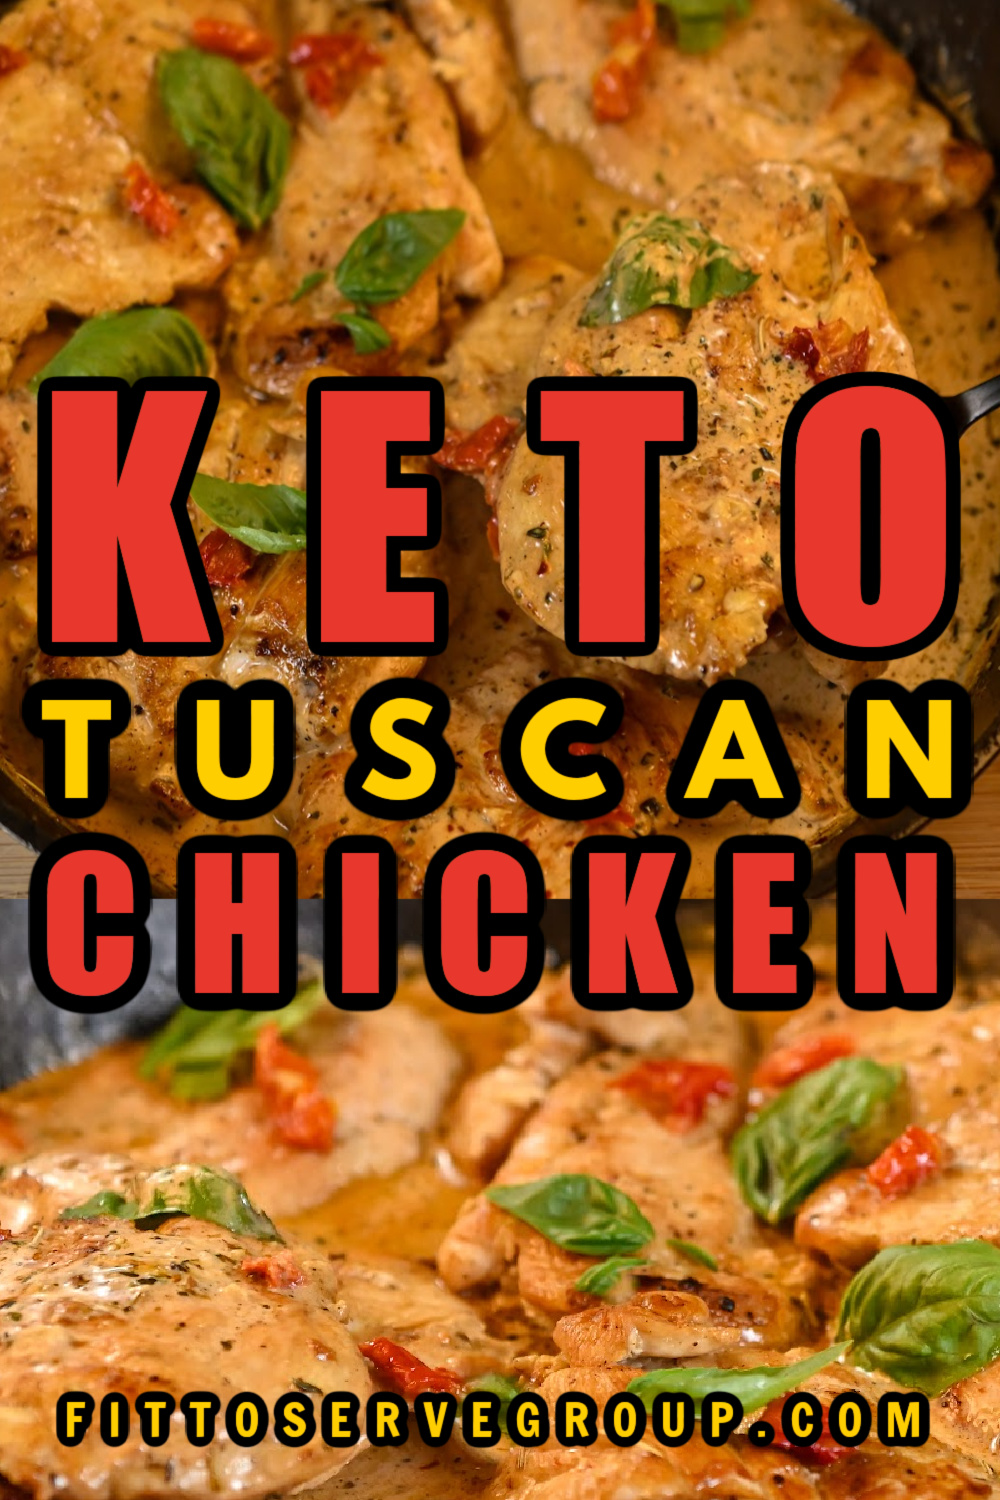 Keto-friendly Tuscan chicken